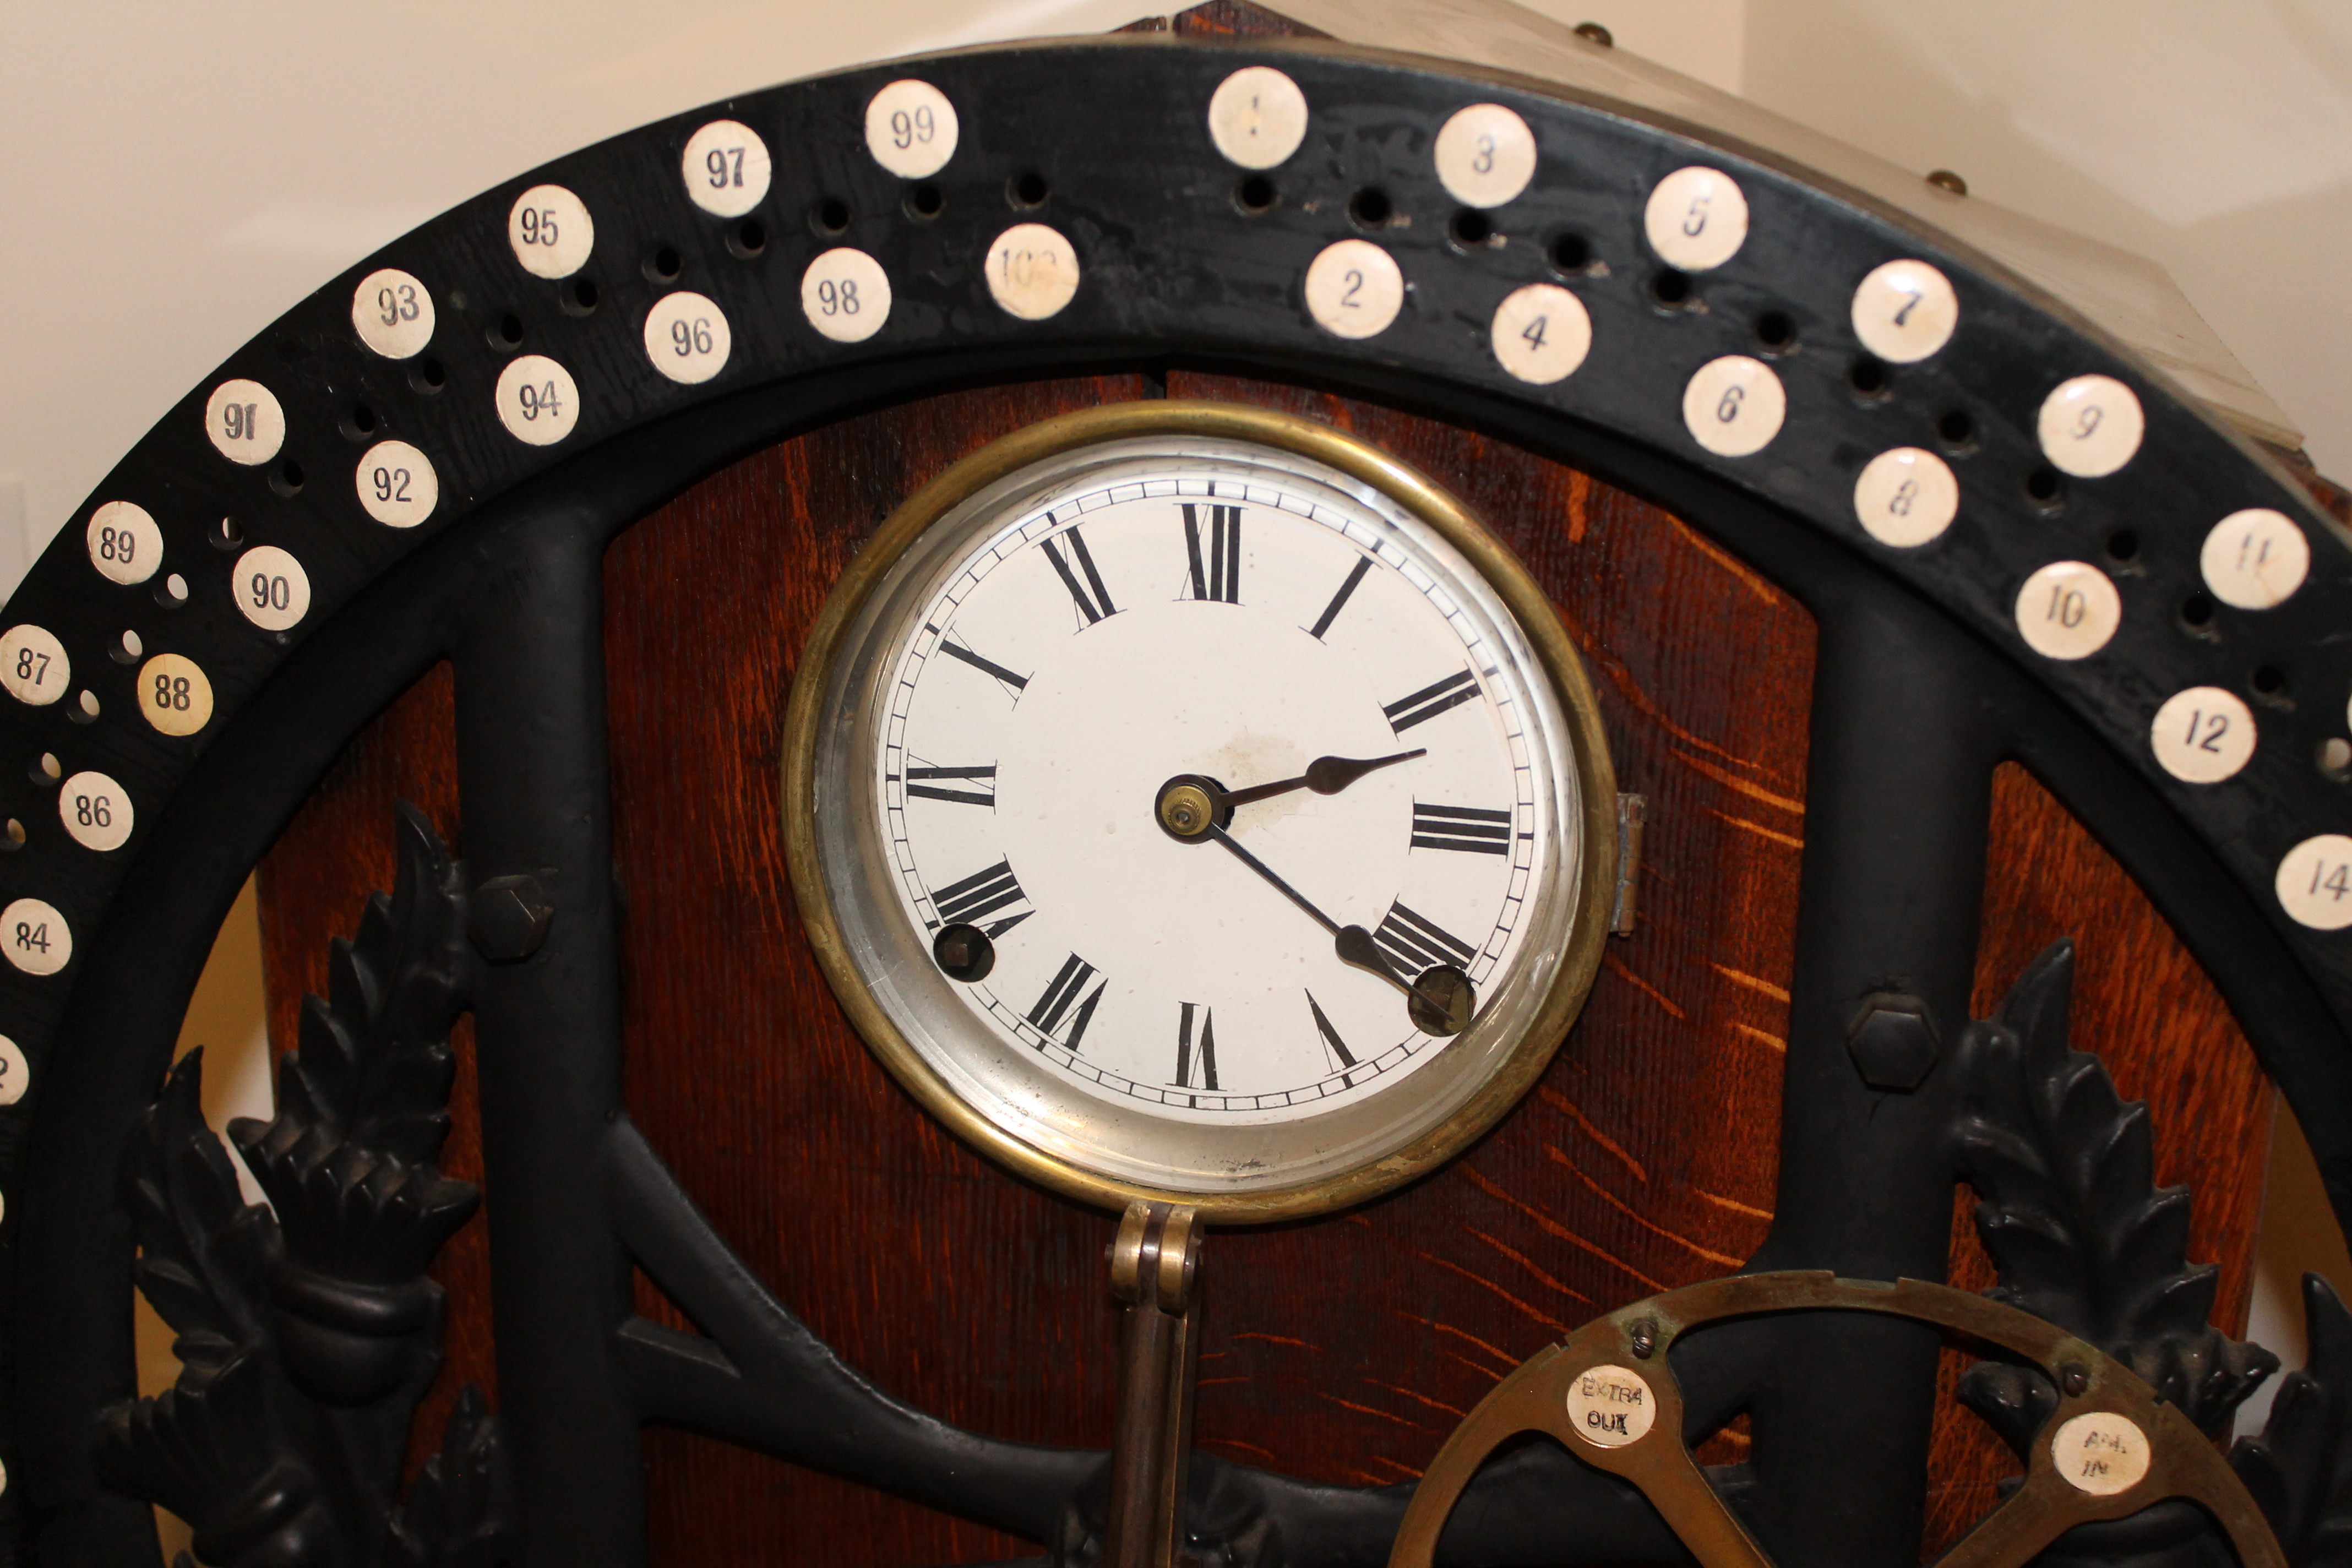 American Clock & Watch Museum